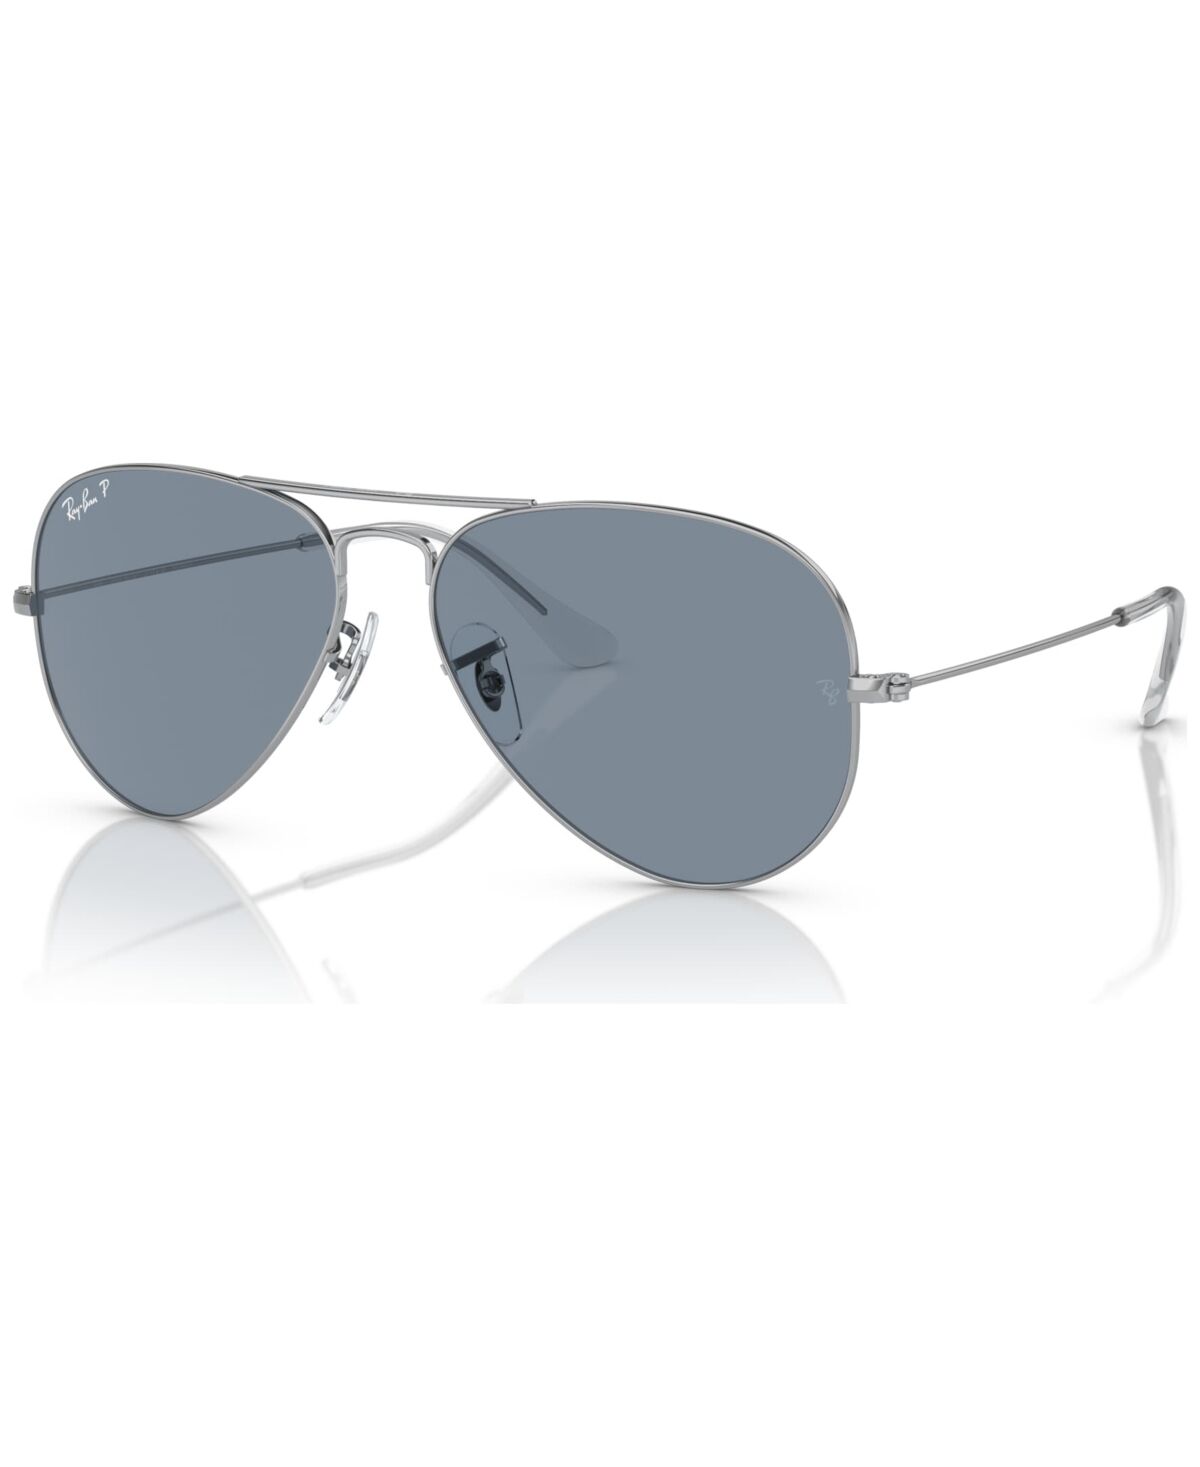 Ray-Ban Unisex Polarized Sunglasses, RB3025 Aviator Classic - Silver-Tone